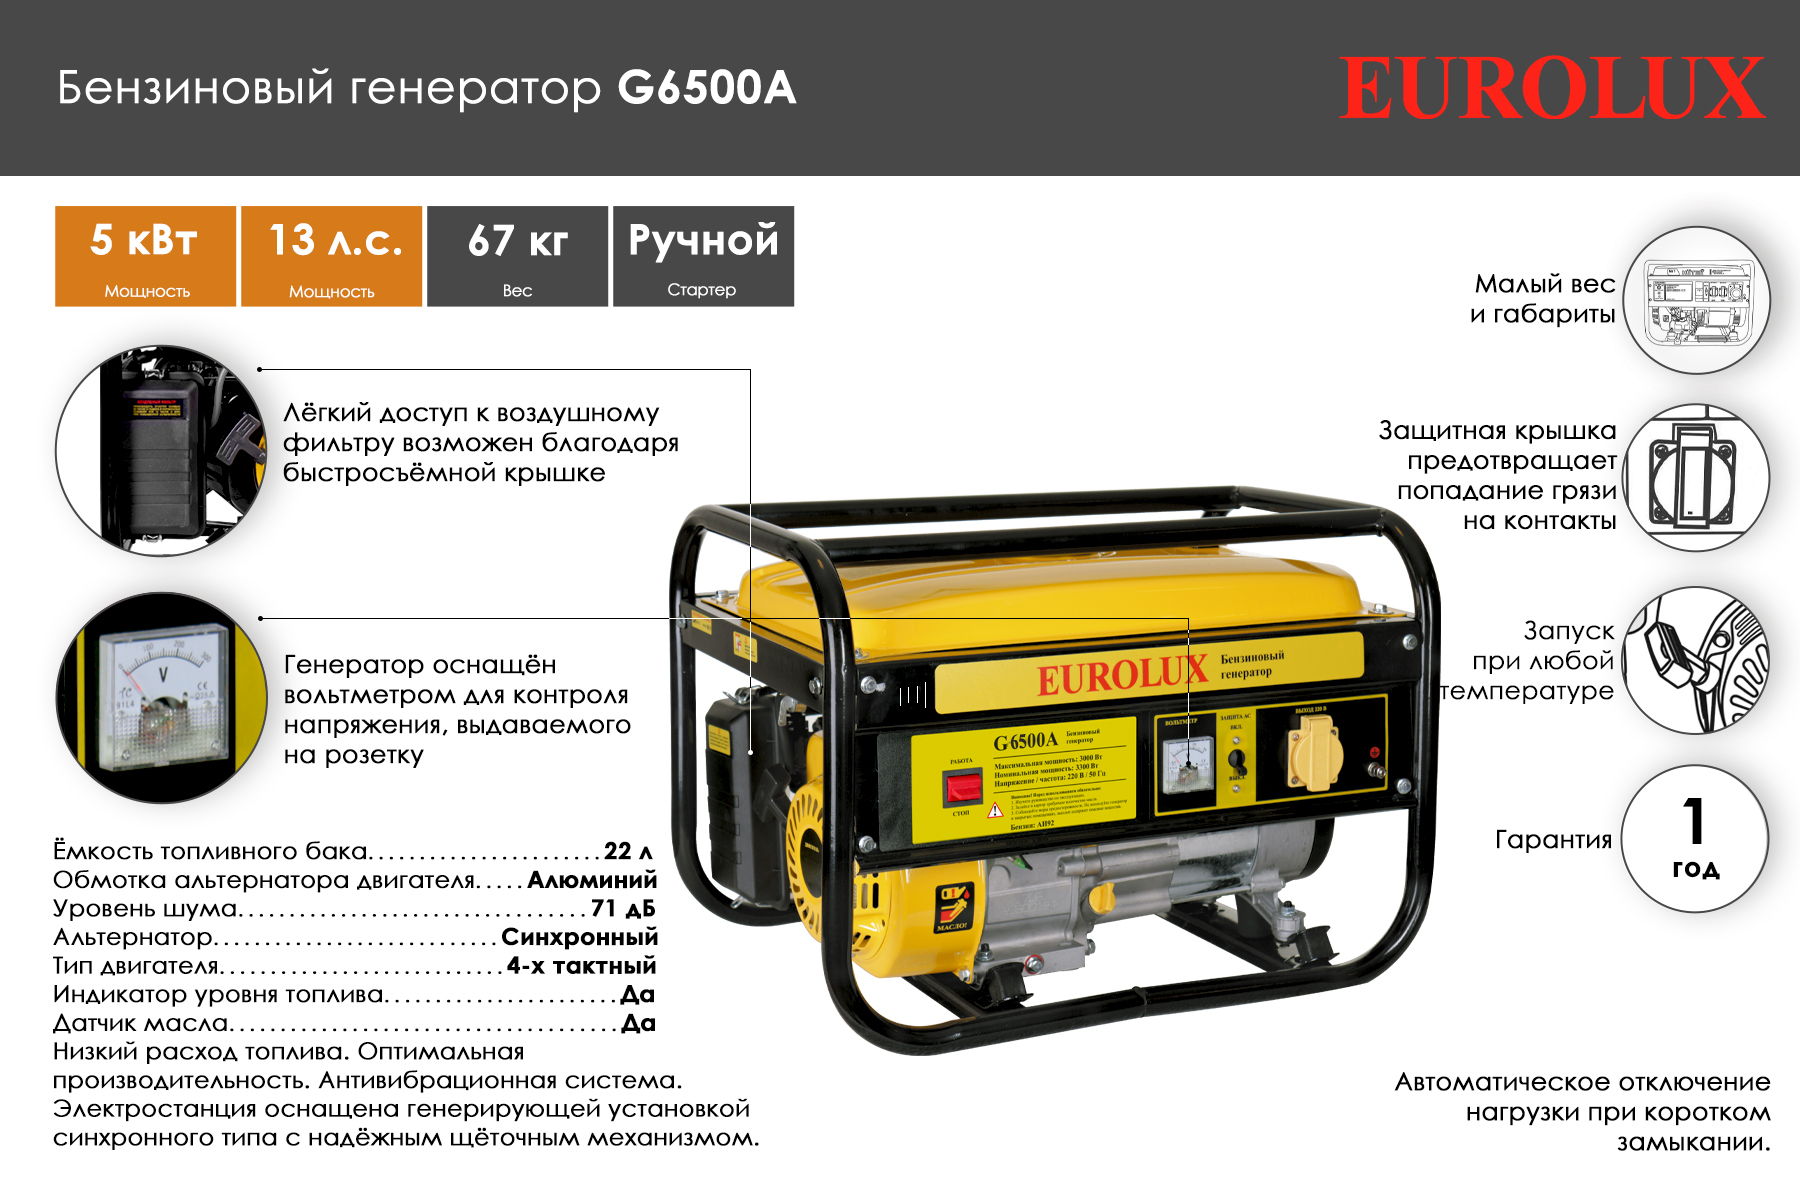 Eurolux g6500a. Электрогенератор g6500a Eurolux. Генератор Eurolux g4000a. Бензиновый Генератор Eurolux g2700a. Электрогенератор Eurolux g3600a 64/1/37.